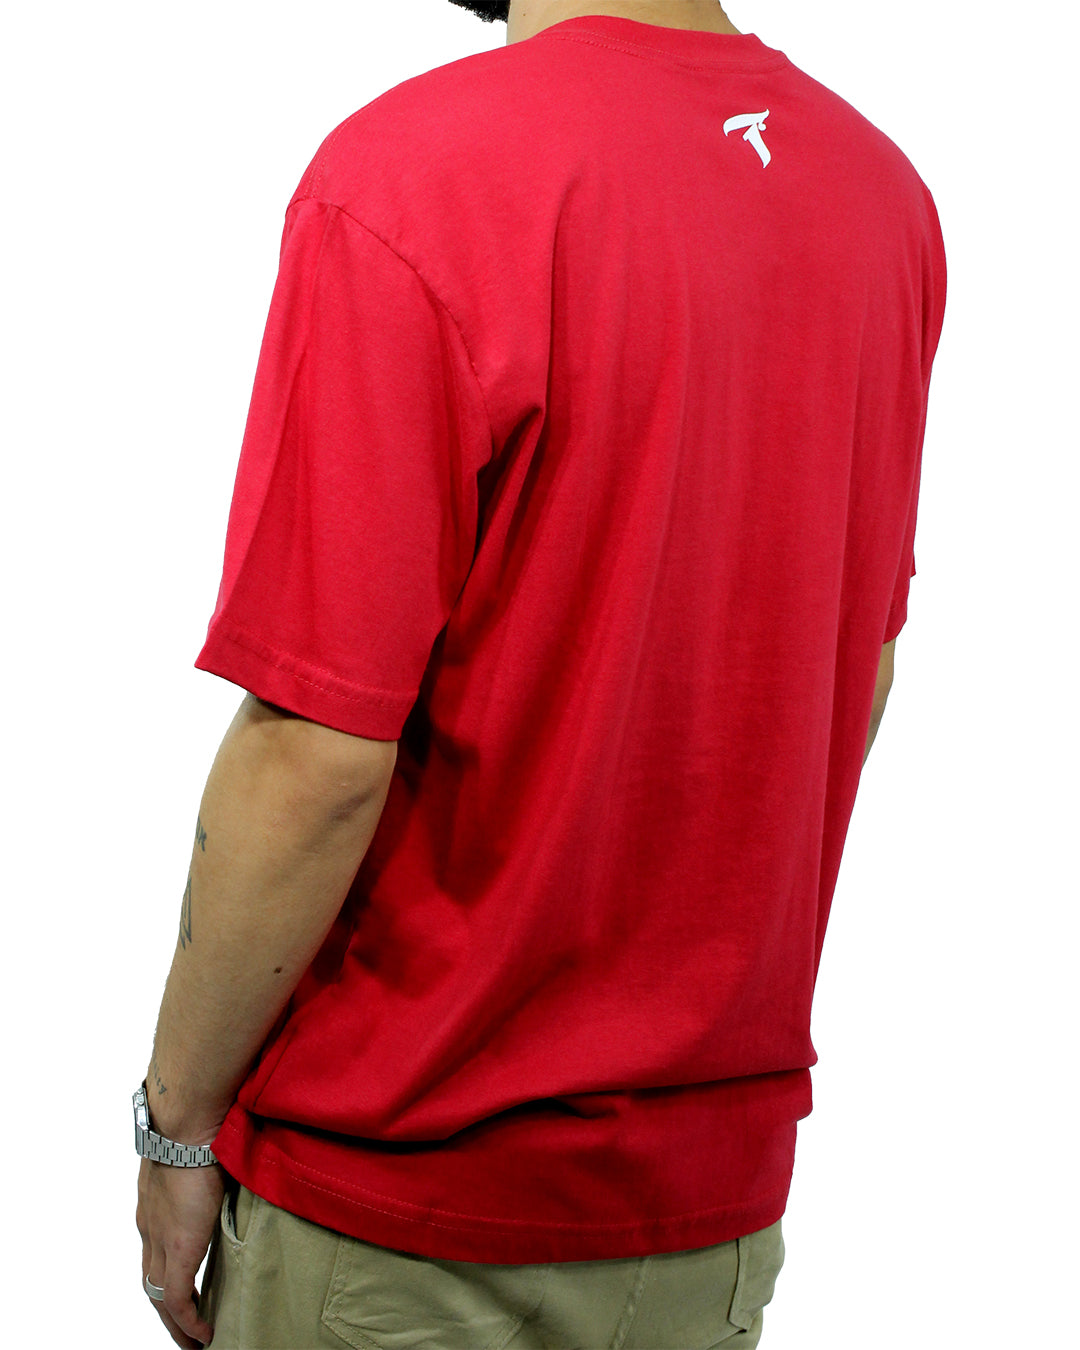 Camiseta Traxart TRXRT Vermelha DZ-215